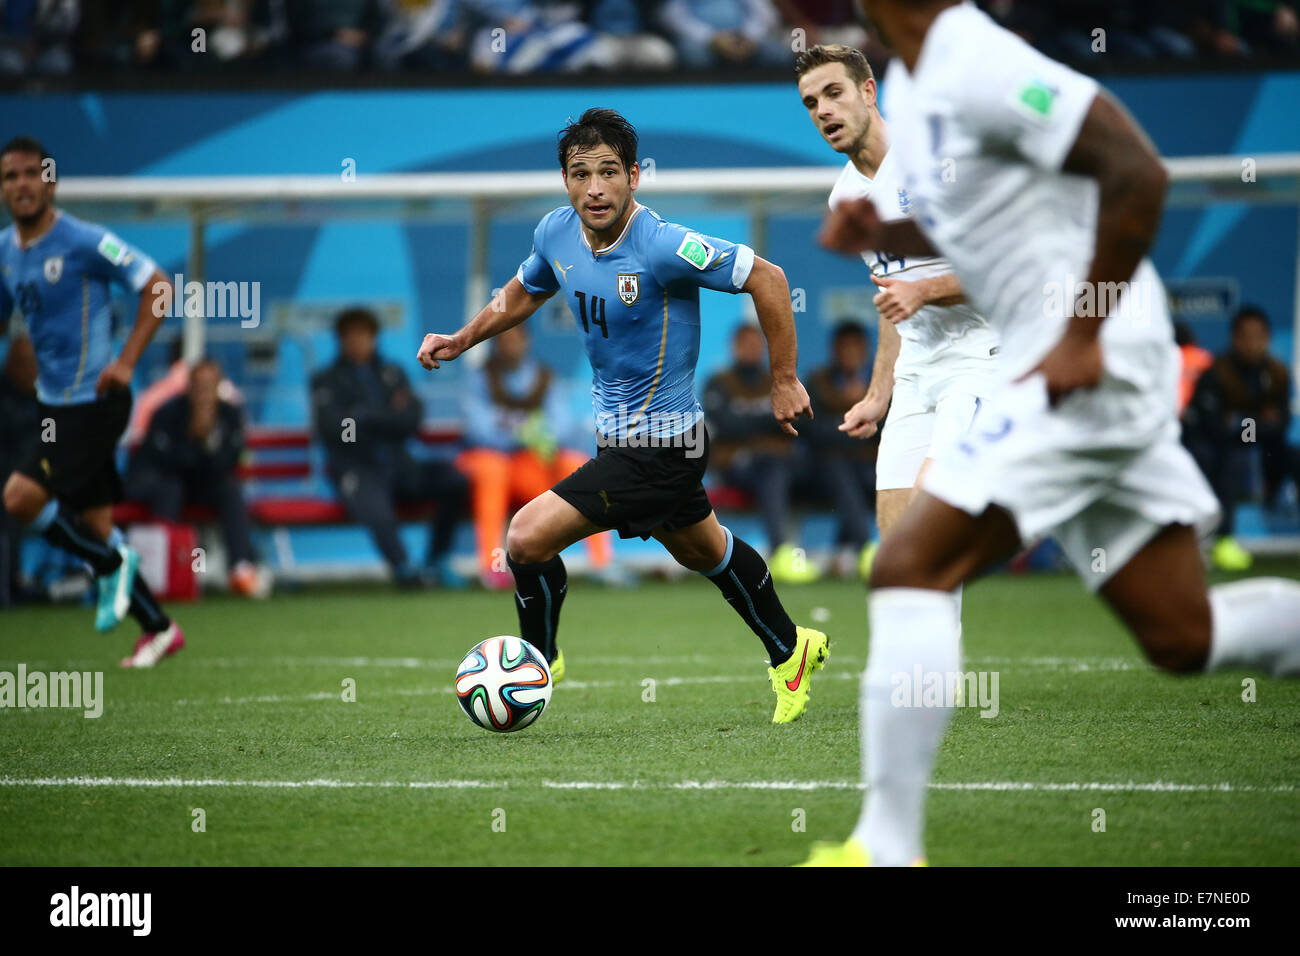 Nicolas Lodeiro. Uruguay v England, group match. FIFA World Cup 2014. Arena de Sao Paulo, Sao Paulo. 19 Jun 2014 Stock Photo